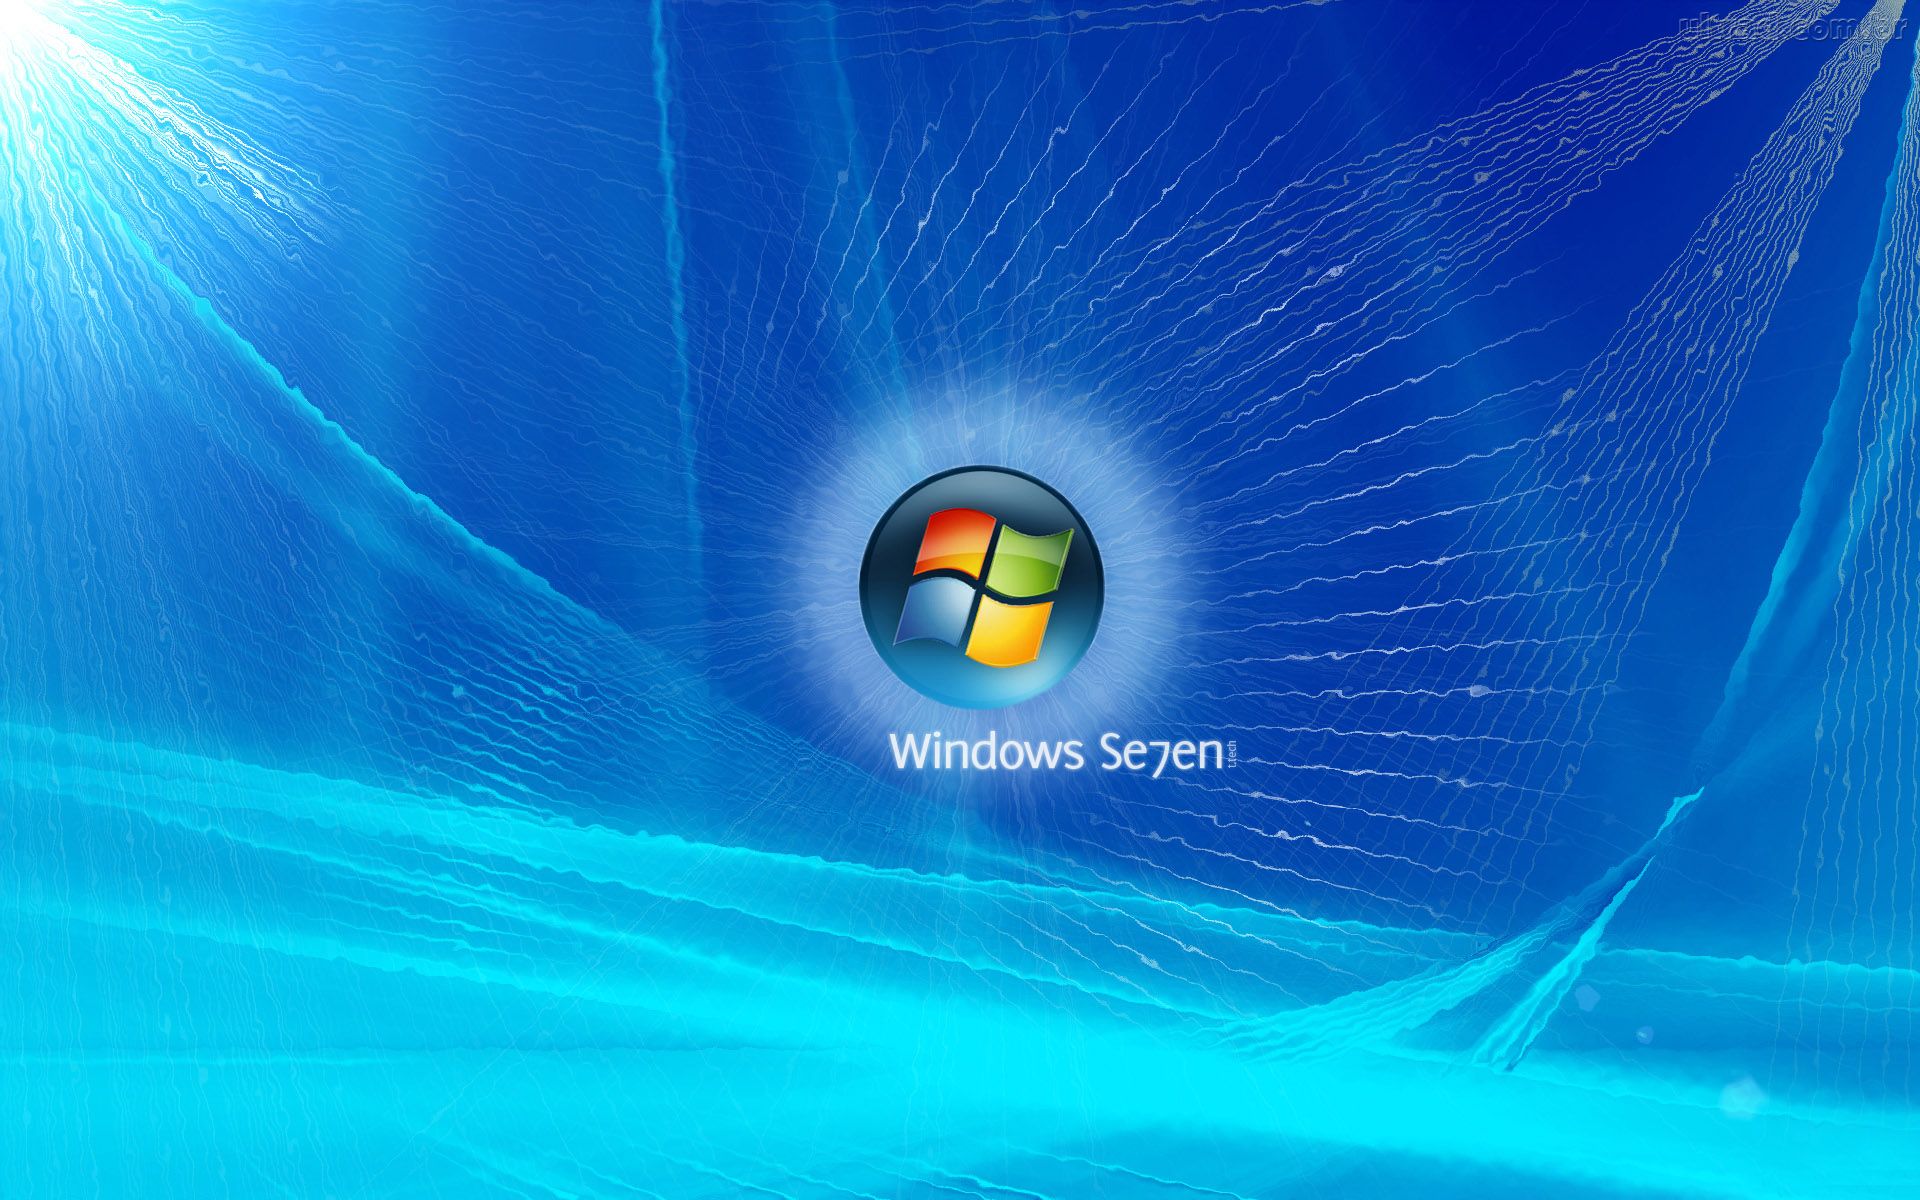 Windows 7 Pro Wallpaper 1680x1050 Wallpapersafari